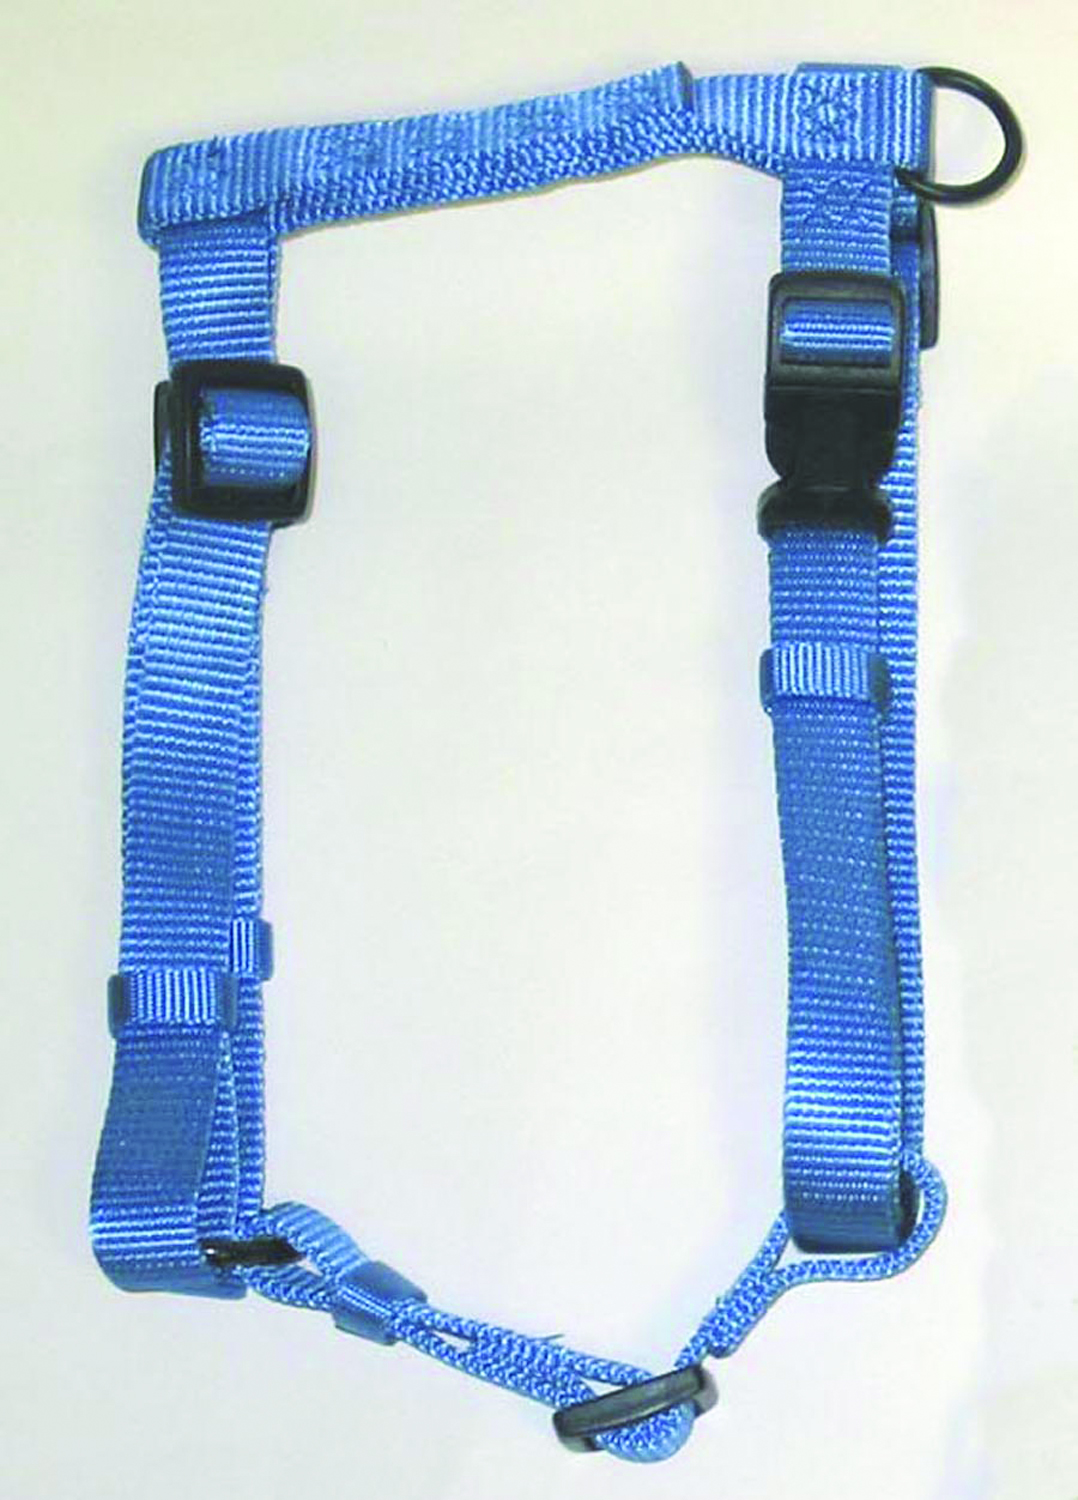 Adjustable Dog Harness - Berry Blue - Medium